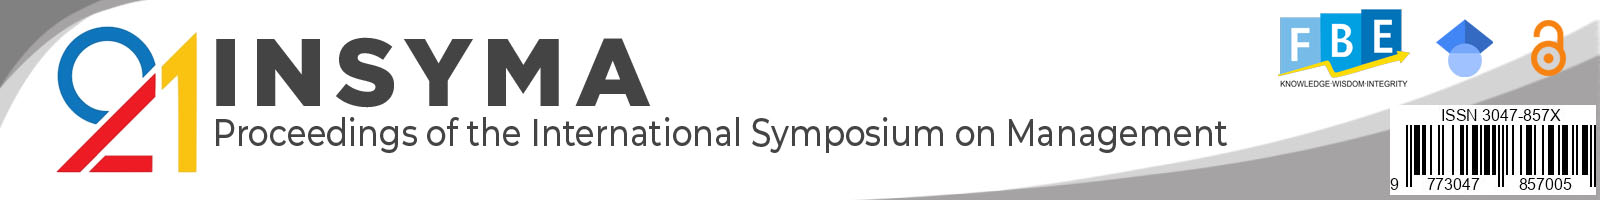 Proceedings of the International Symposium on Management (INSYMA)